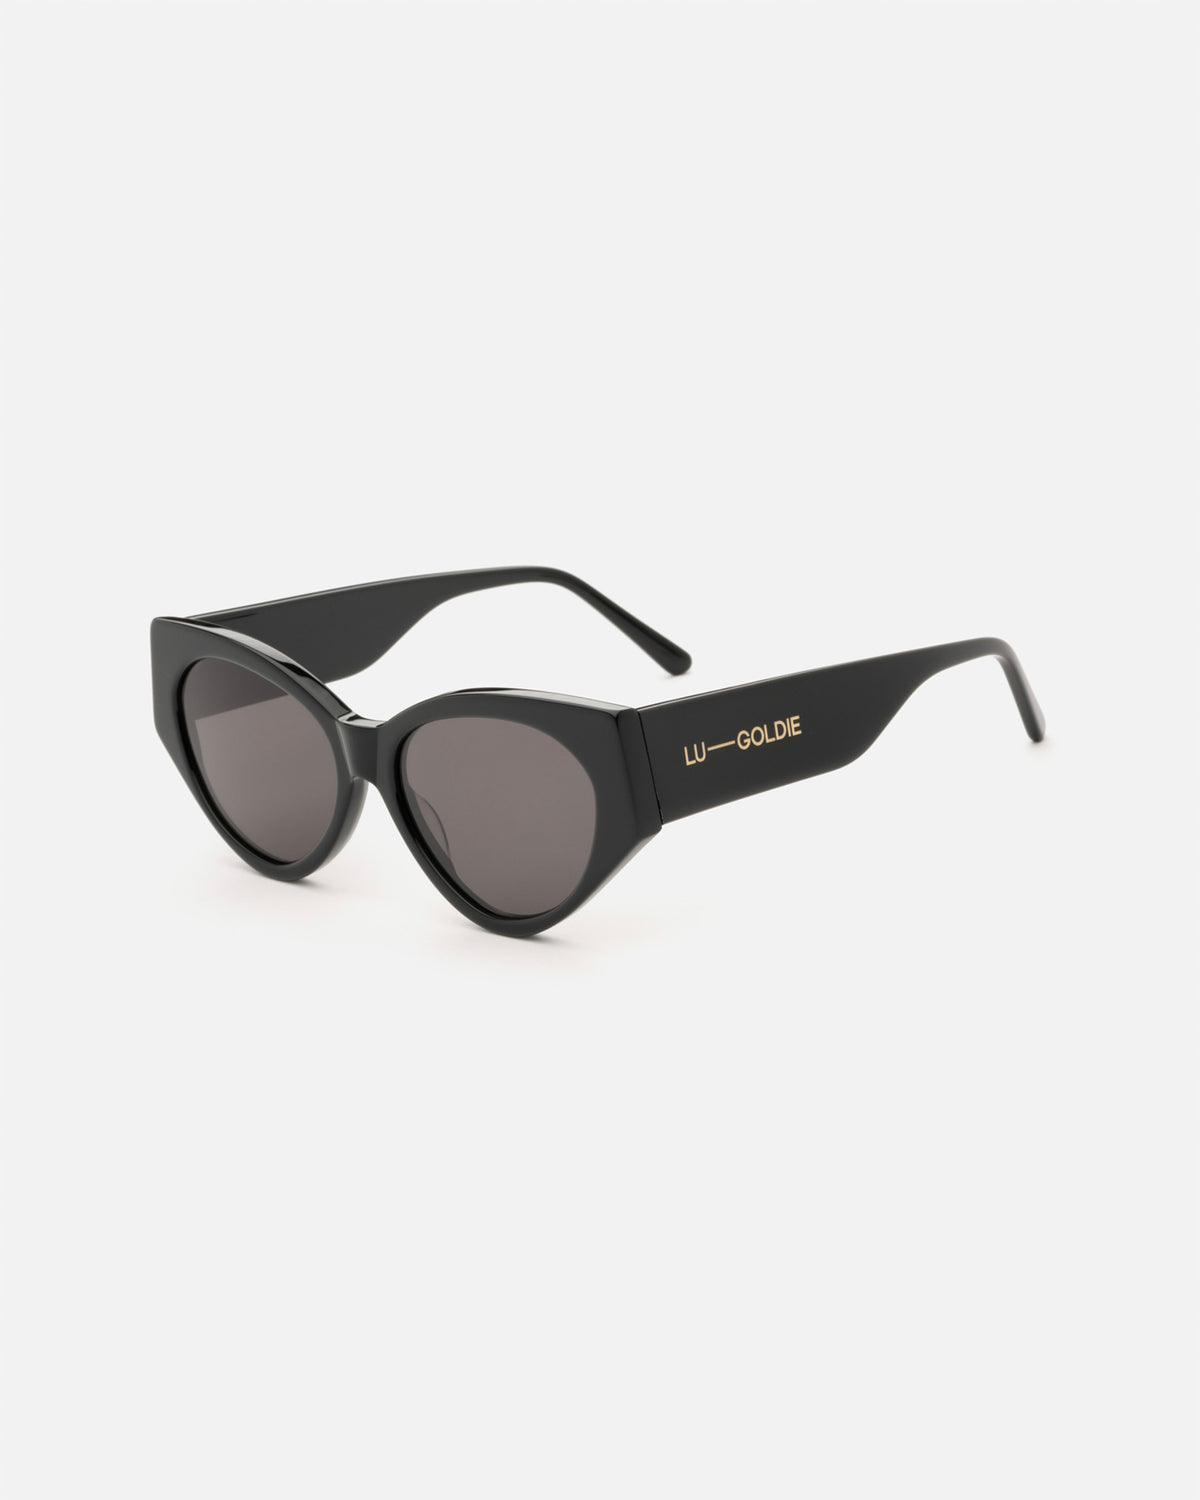 Lu Goldie Milou Sunglasses - Black Black